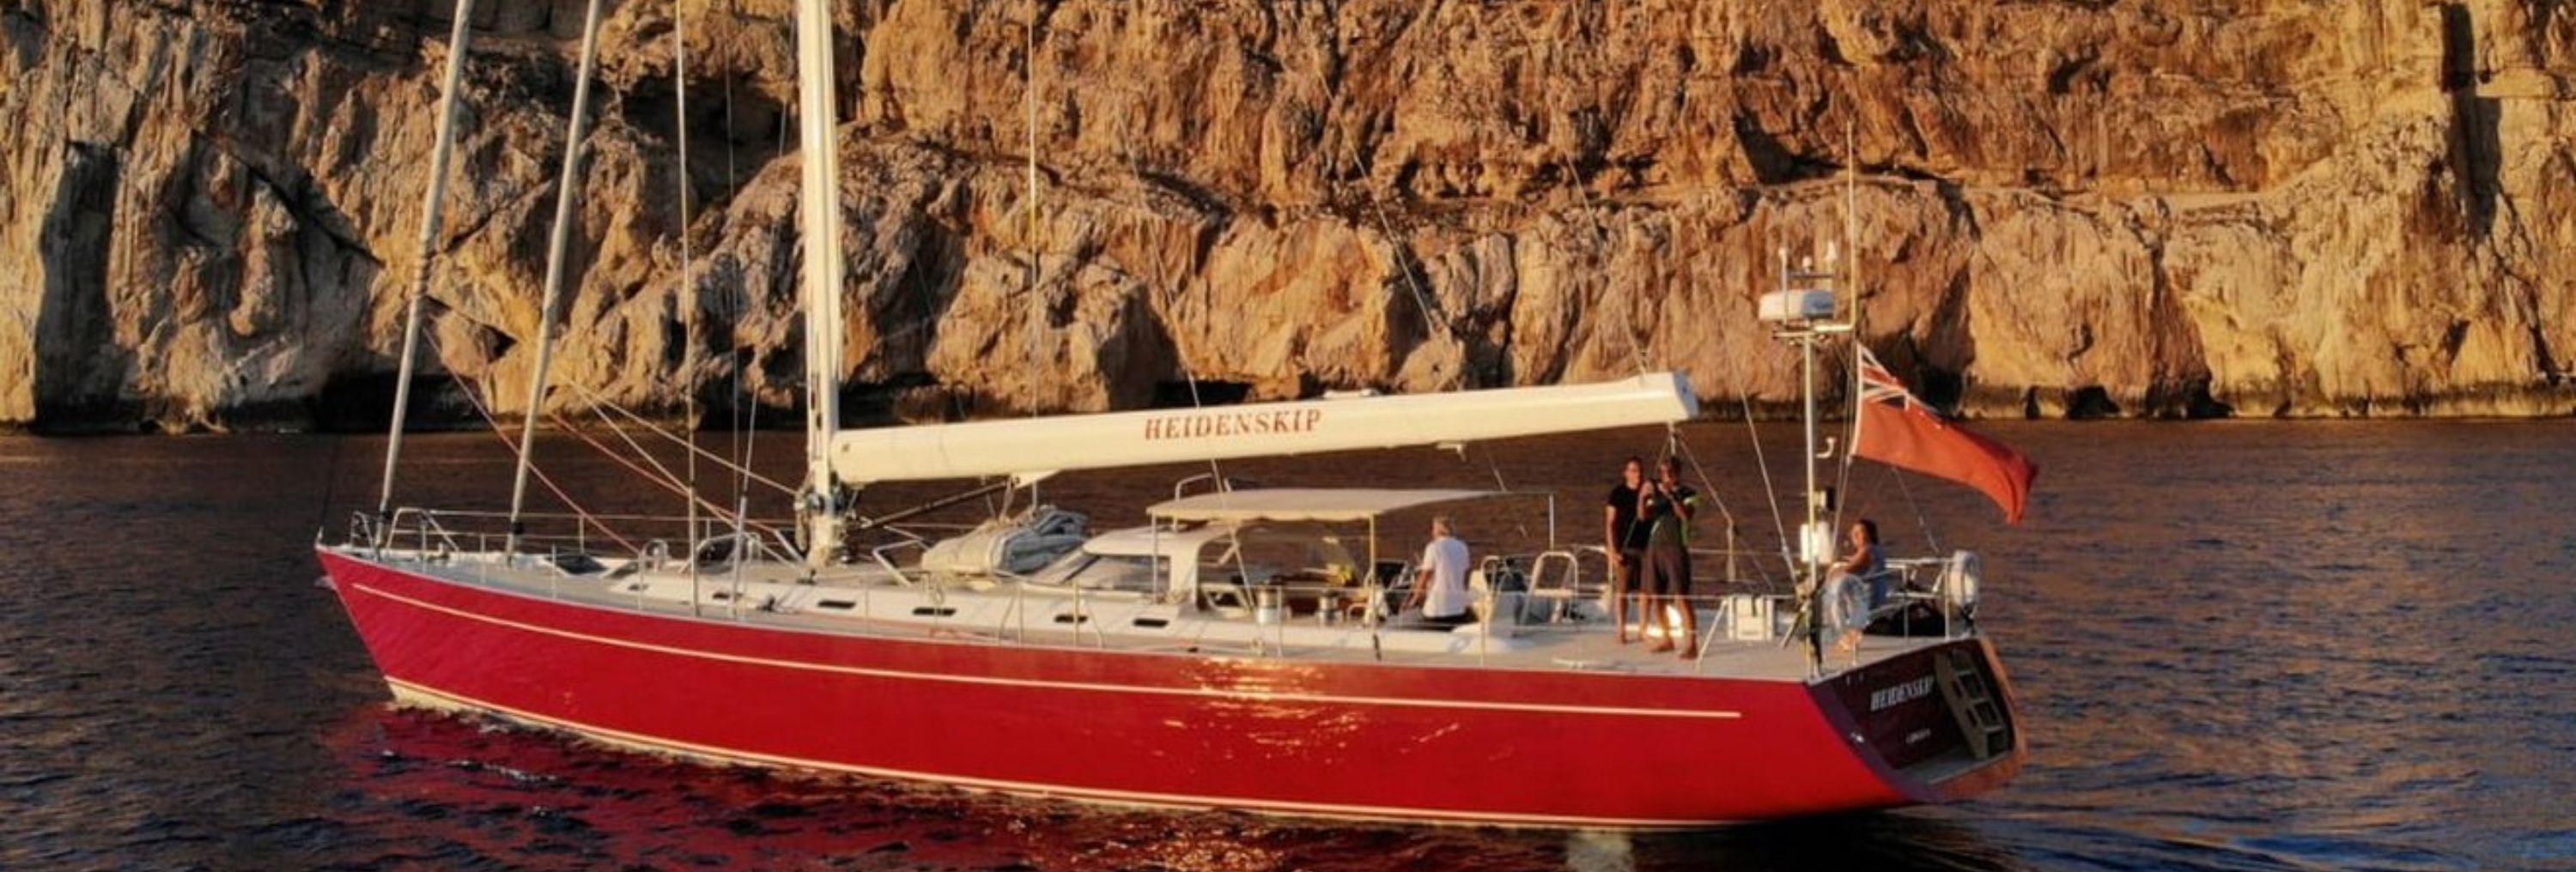 HEIDENSKIP: New Sailing Yacht For Sale!